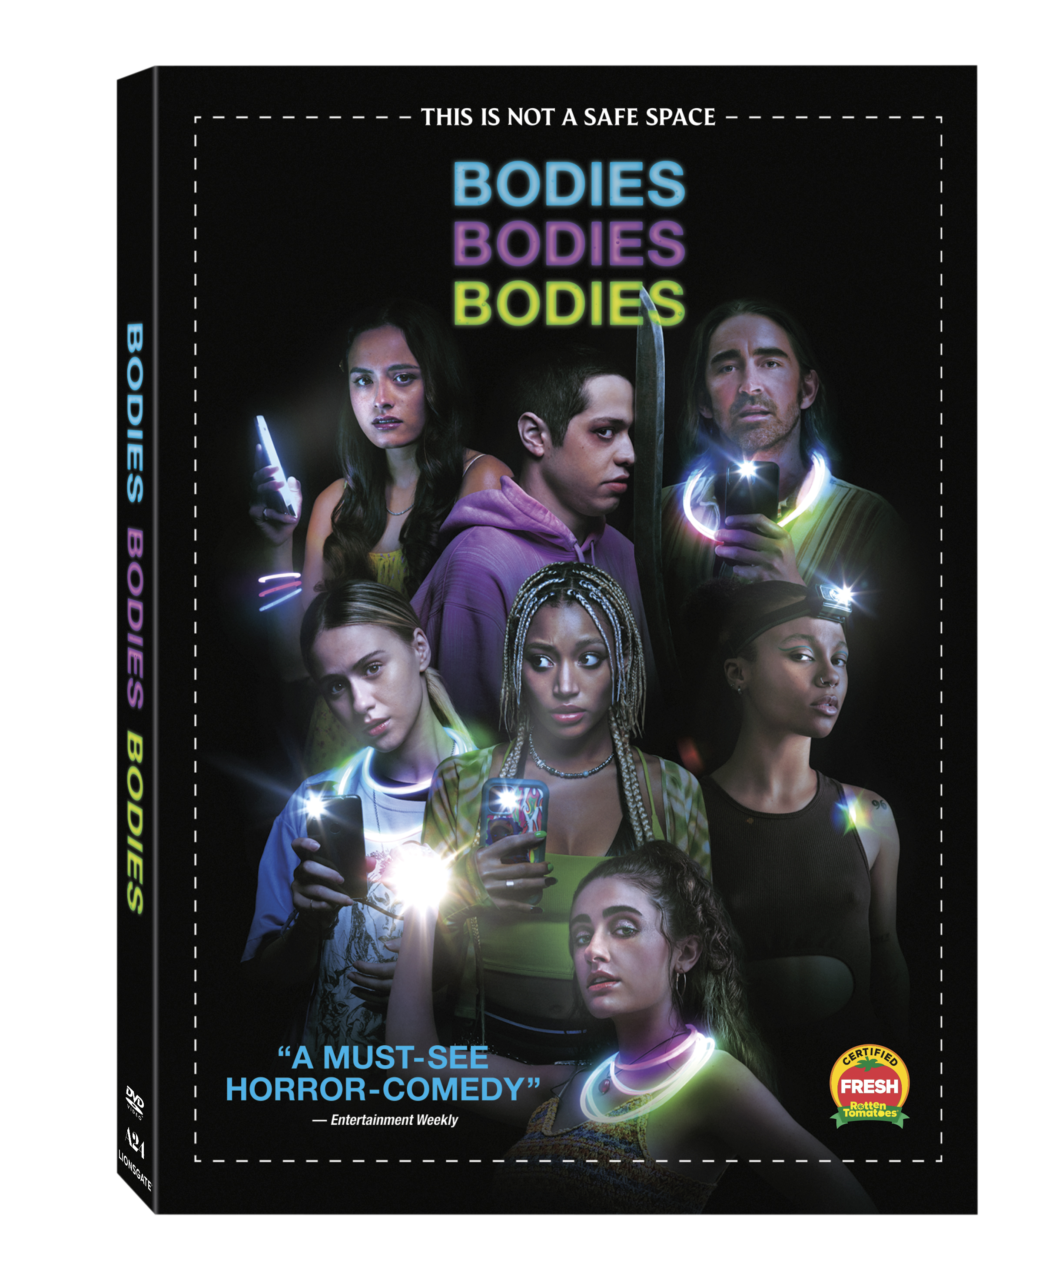 Bodies Bodies Bodies DVD cover (Lionsgate)